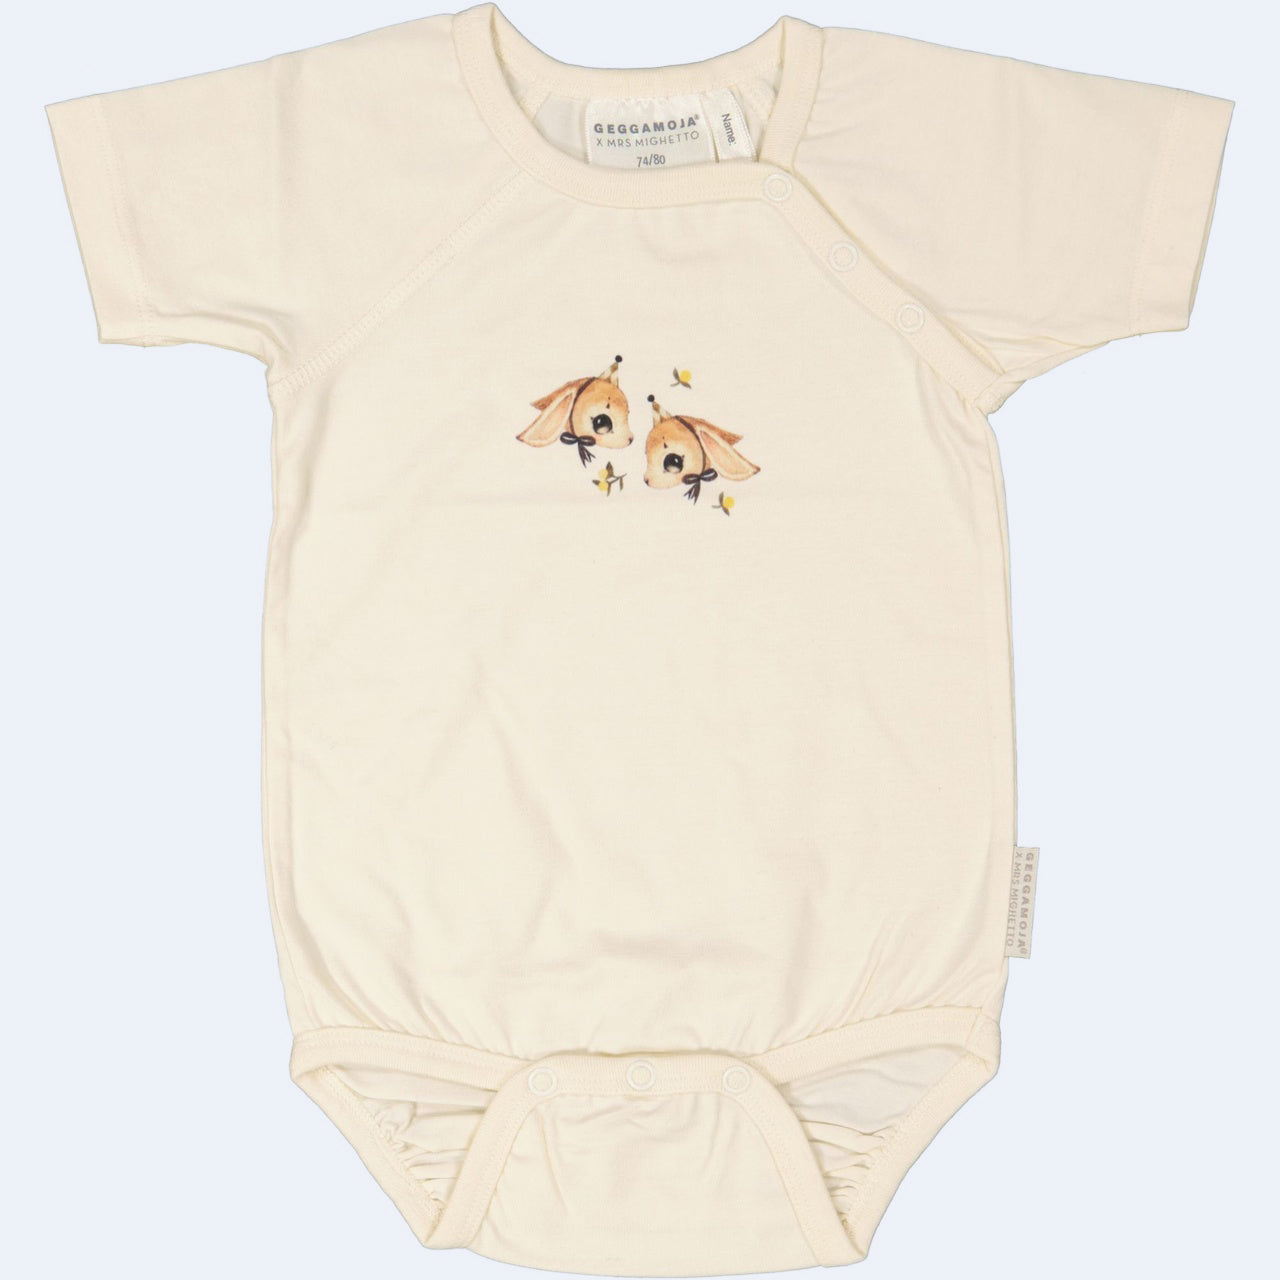 Geggamoja ® MRS MIGHETTO "LONG EARS" Baby Body Shirt in Soft Bamboo/Organic Cotton